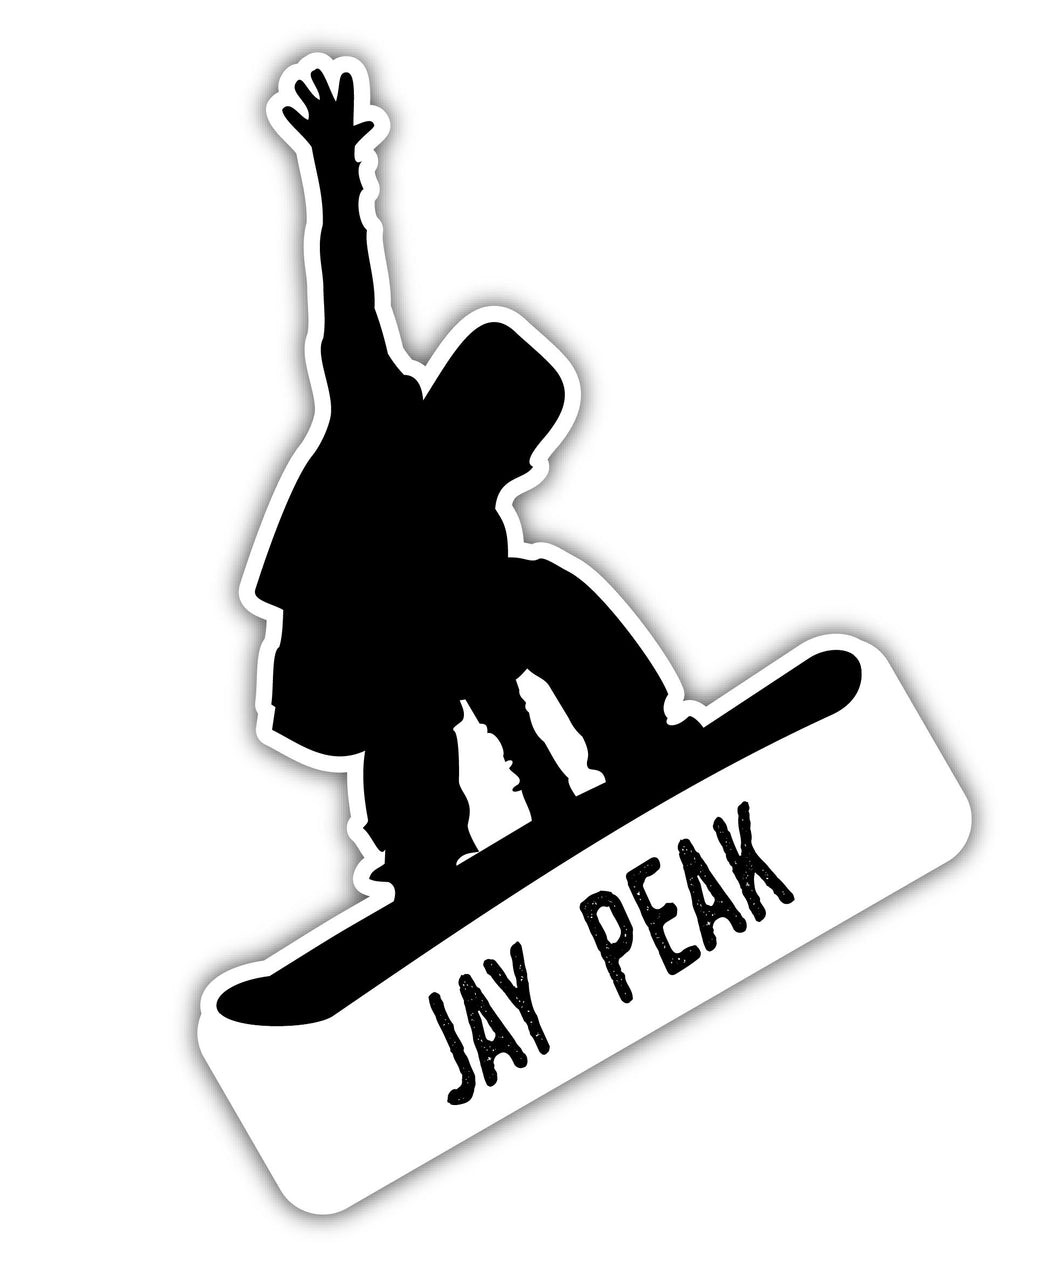 Jay Peak Vermont Ski Adventures Souvenir Approximately 5 x 2.5-Inch Vinyl Decal Sticker Goggle Design